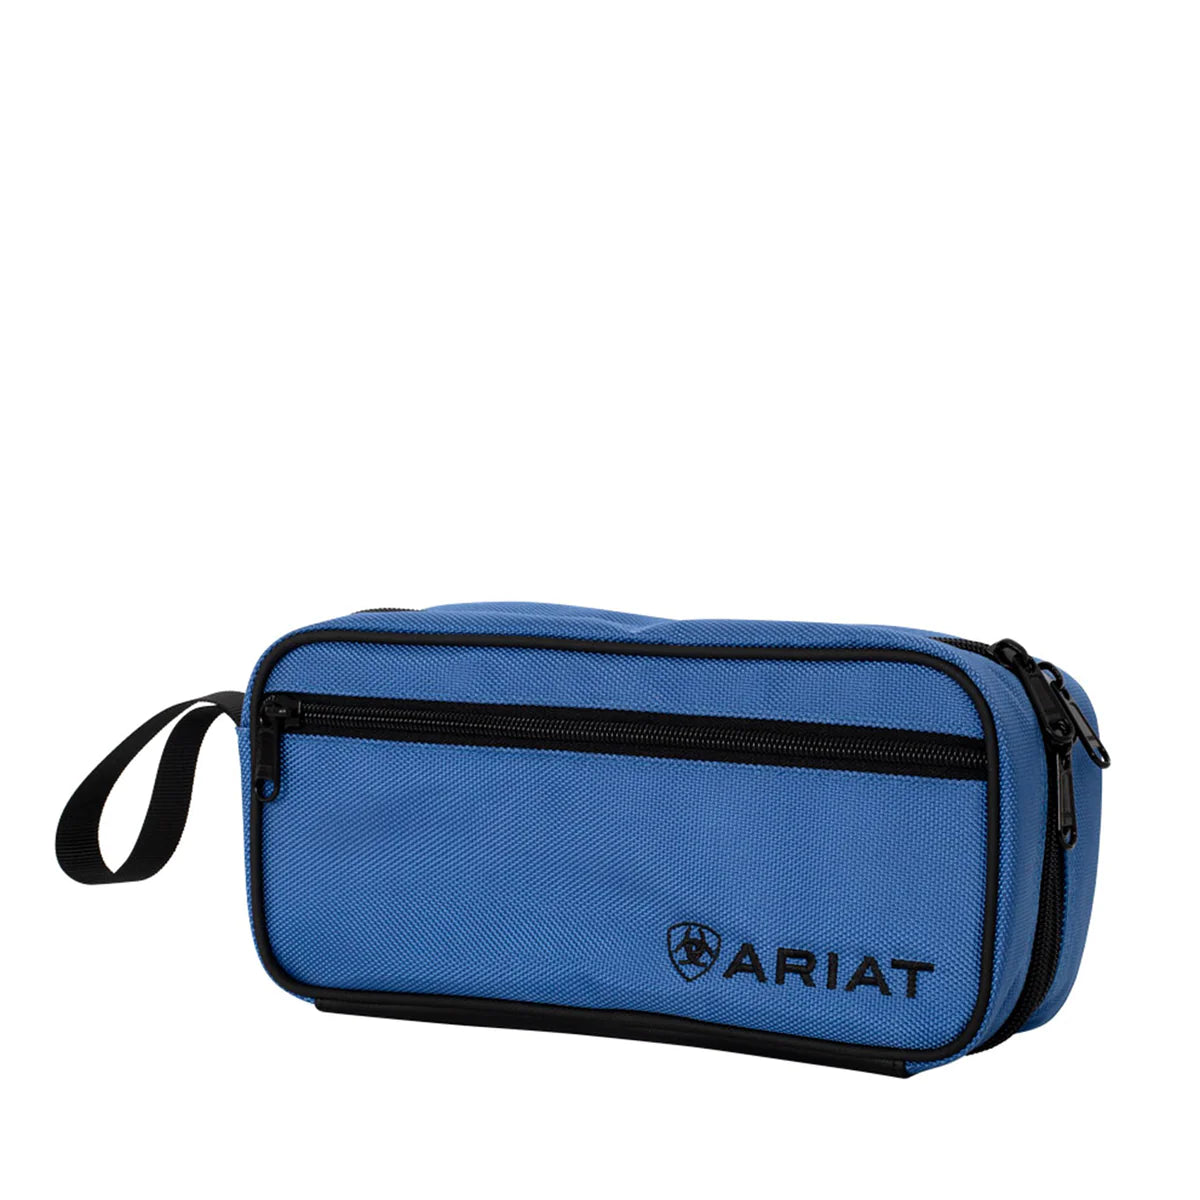 Ariat Toiletries Bag